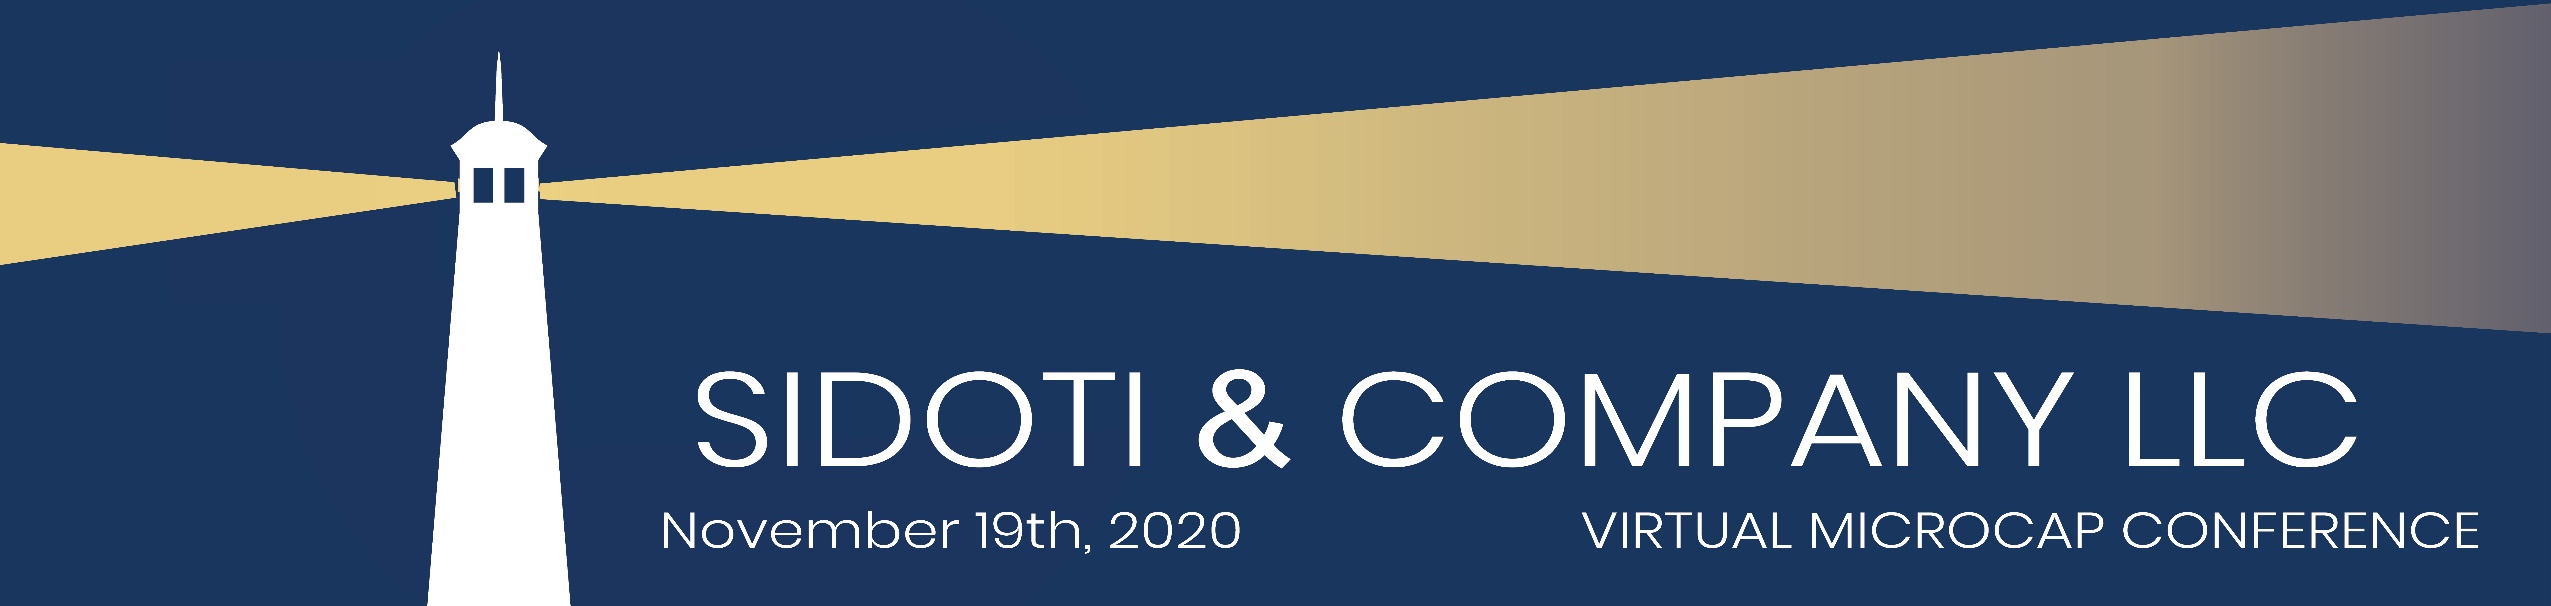 Sidoti & Company, LLC, Thursday, November 19, 2020, Press release picture